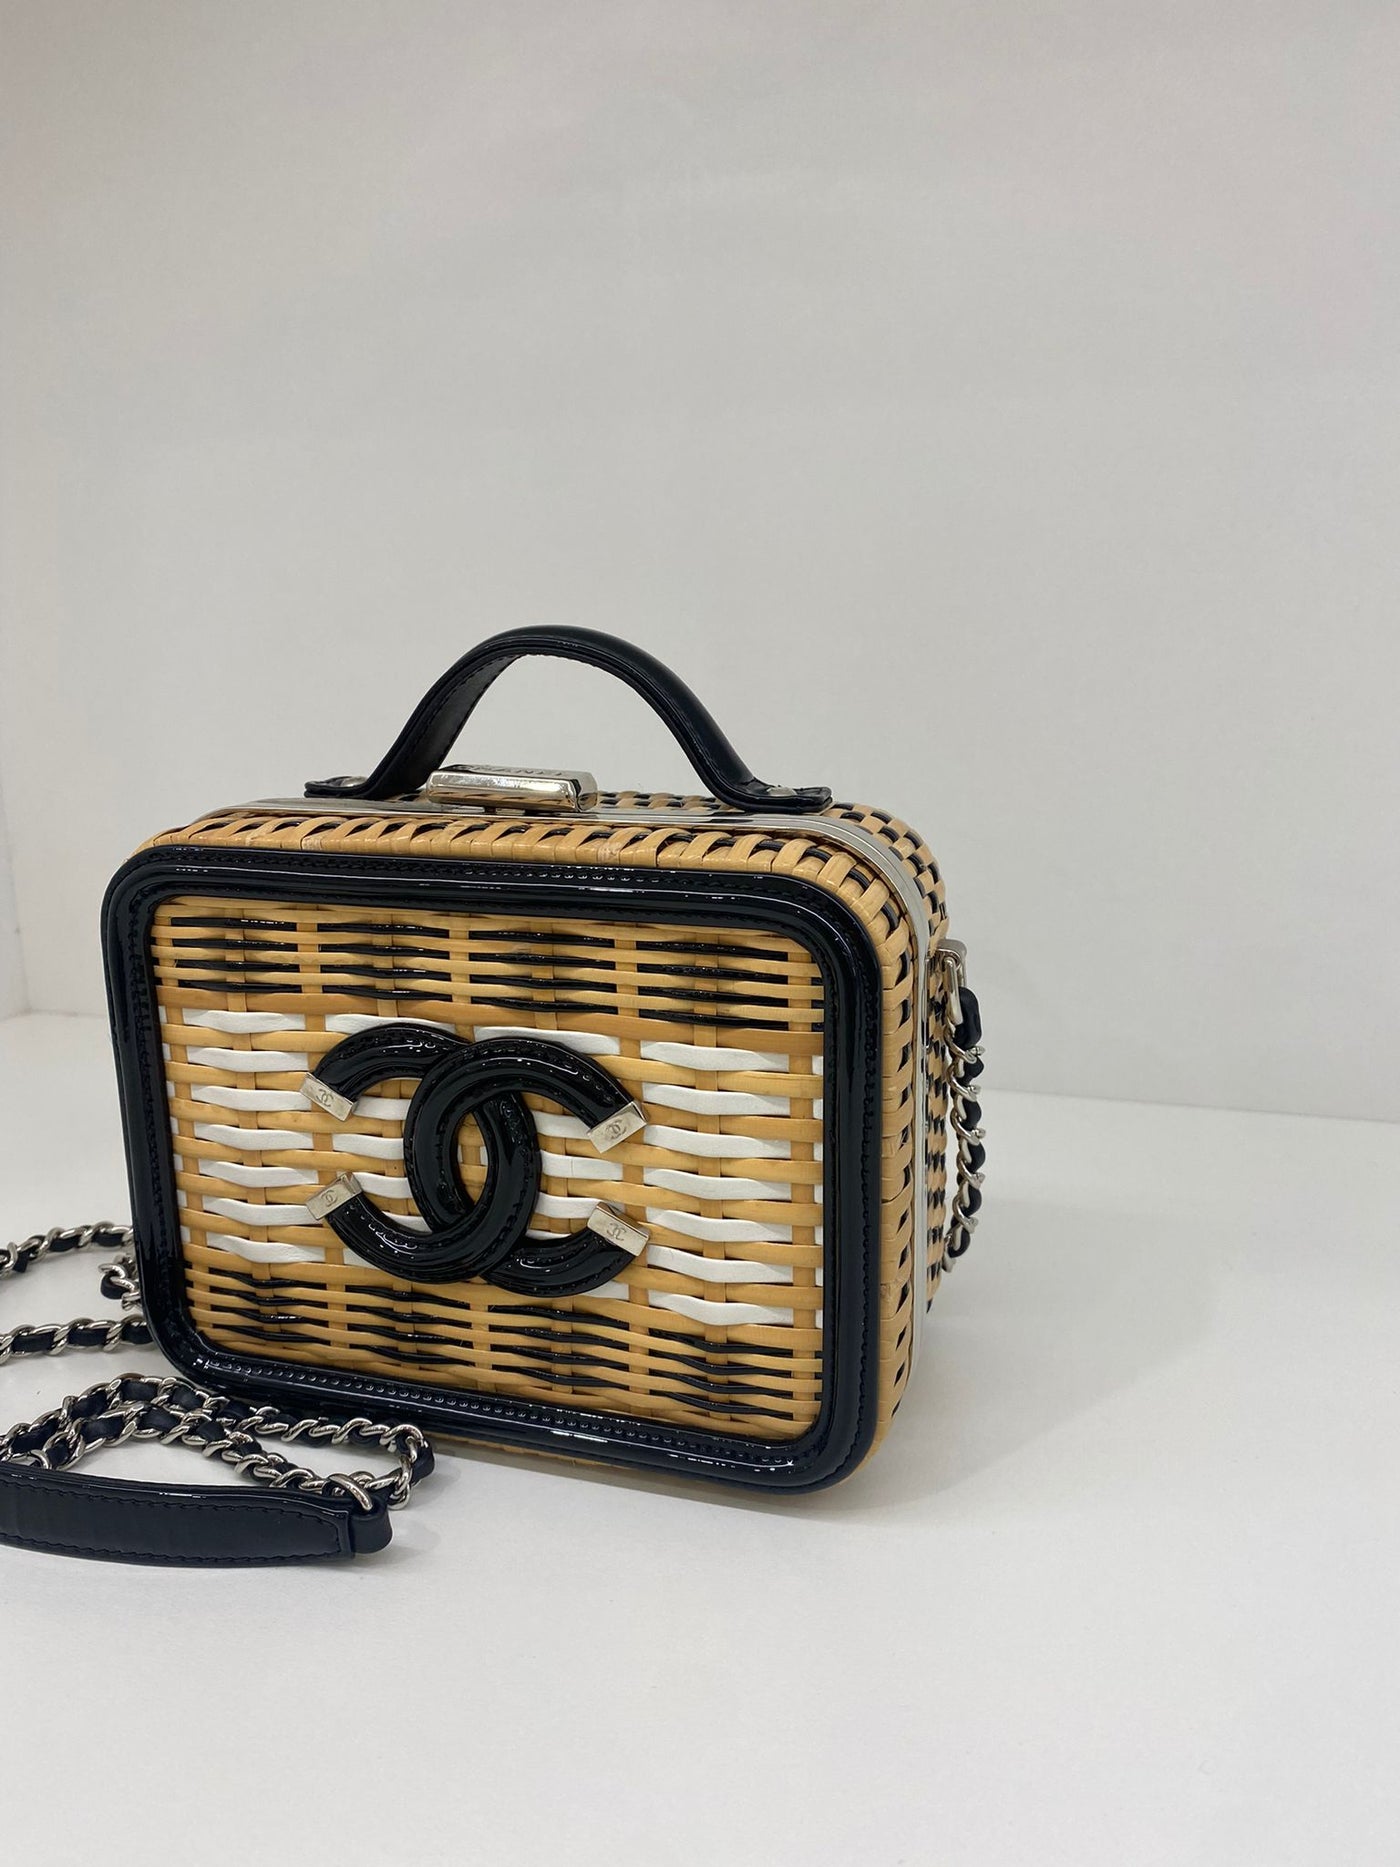 Chanel White/Black Rattan Vanity Bag - SOLD